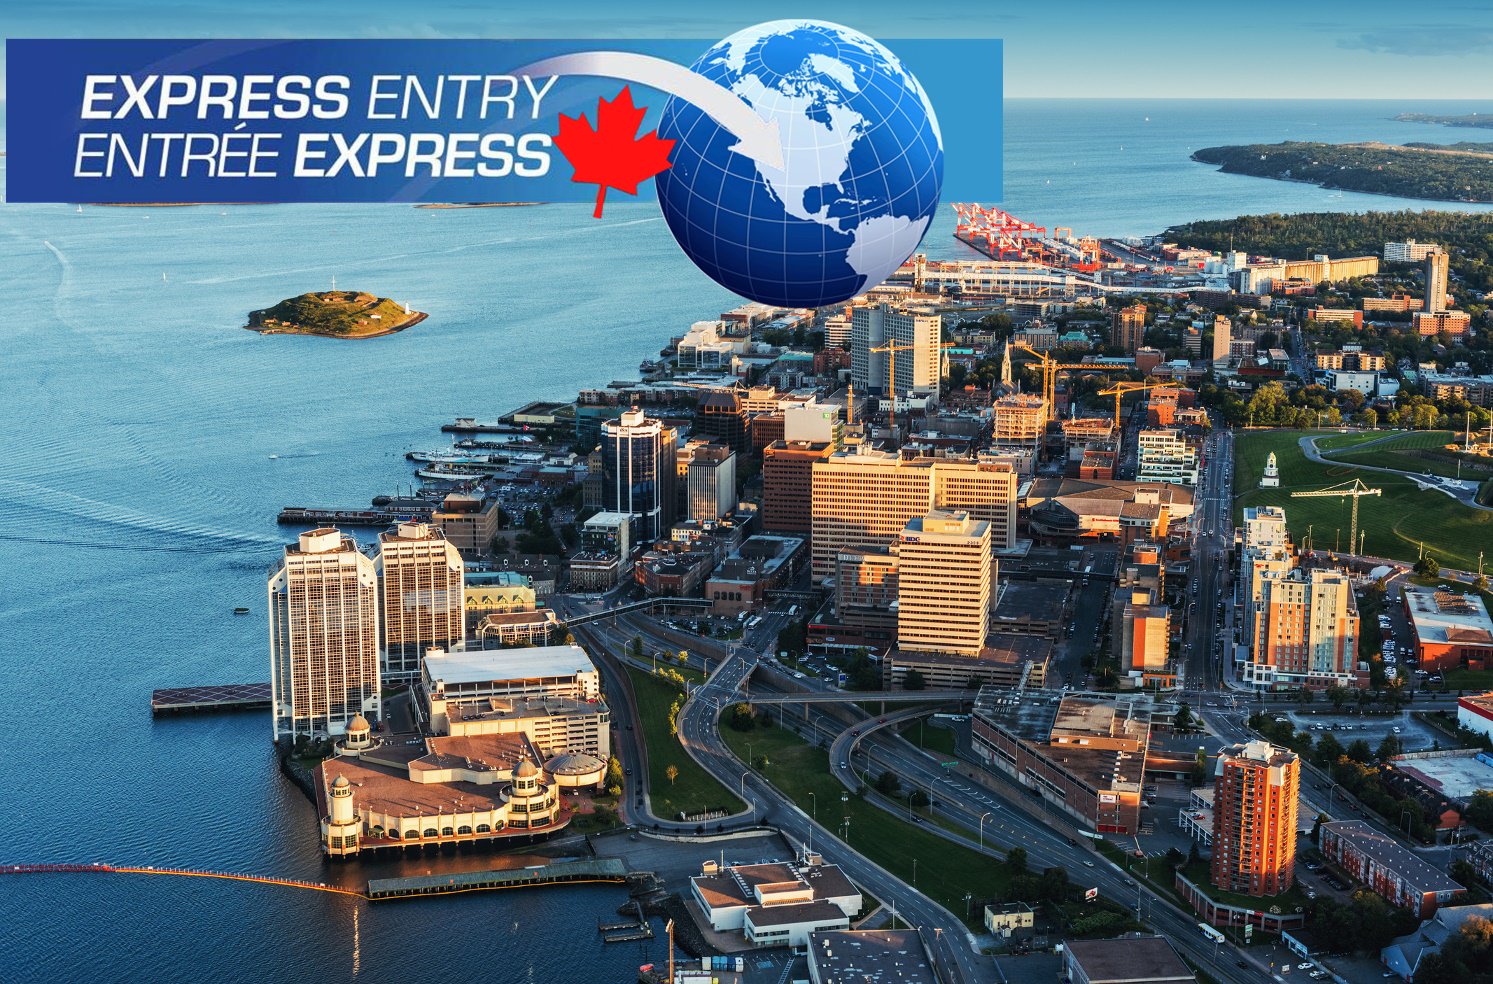 Nova Scotia launched its recent Express Entry immigration scheme